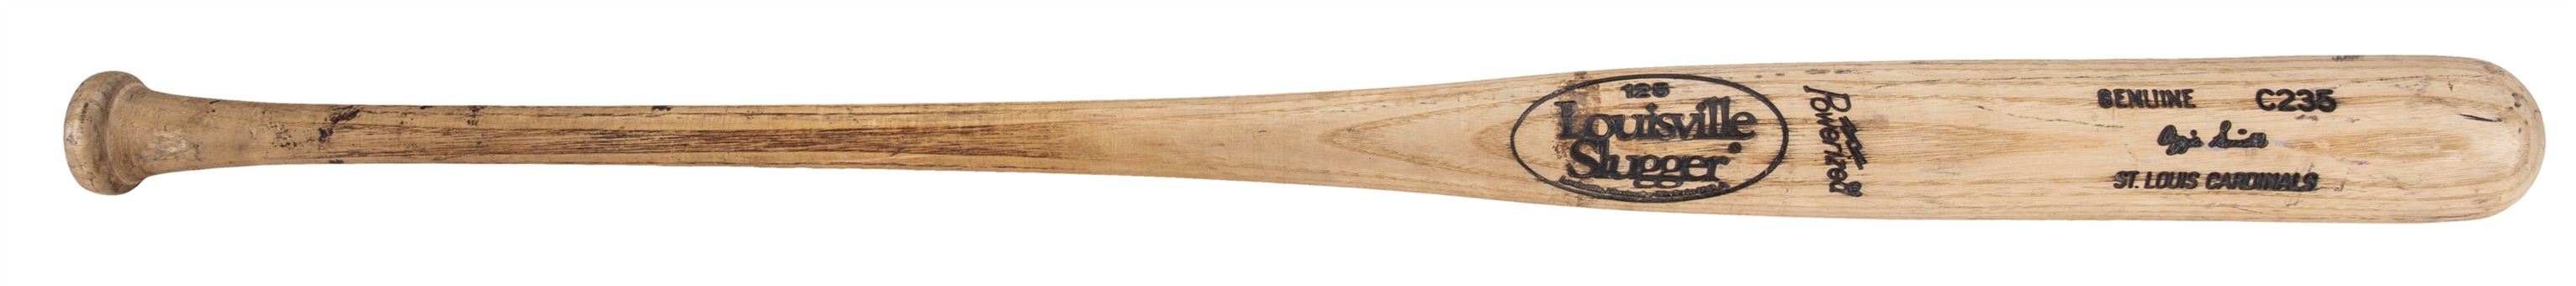 1992 Ozzie Smith Game Used Louisville Slugger C235 Model Bat (PSA/DNA GU 9.5)